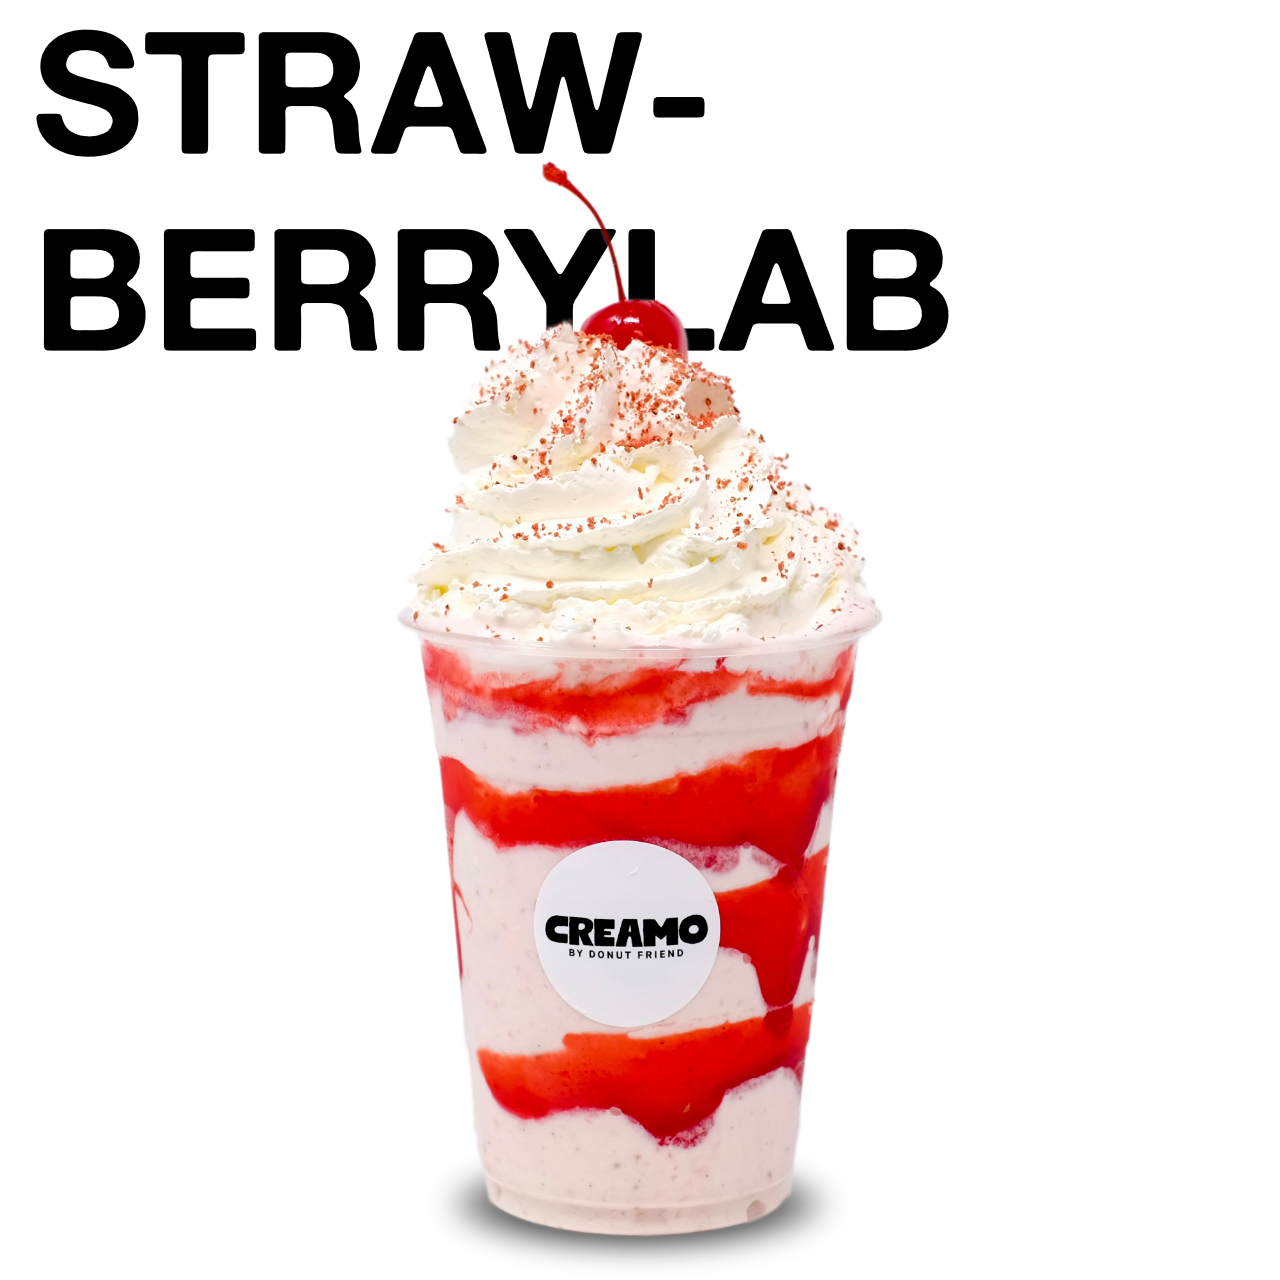 Strawberrylab